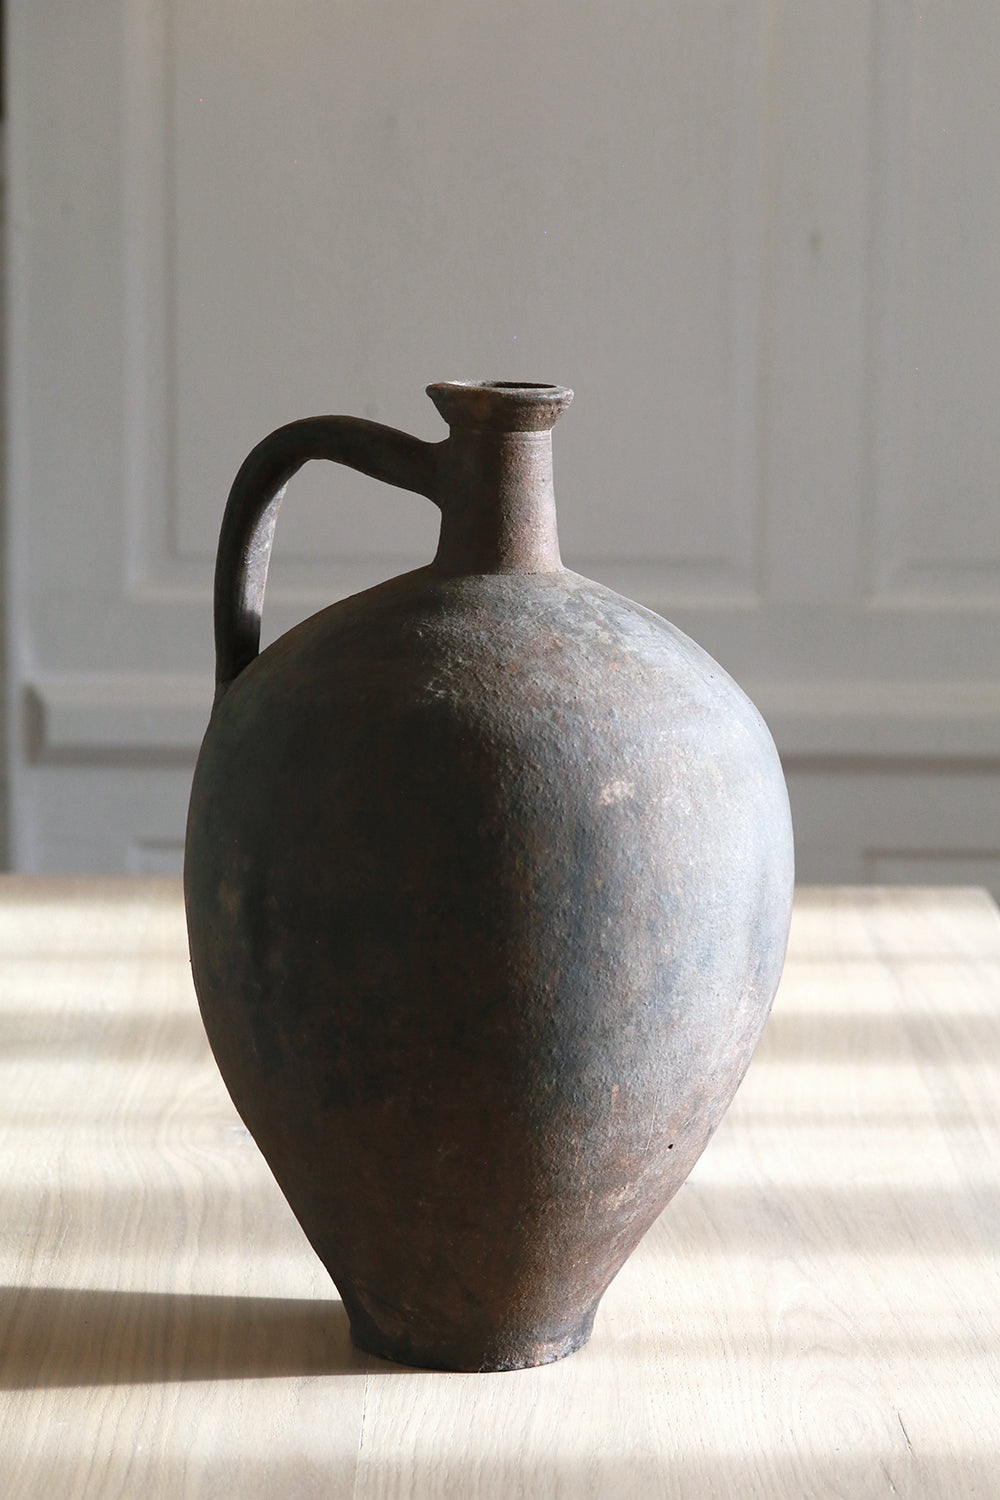 Dark clay terracotta Turkish Amphora pot as standalone statement table centrepiece